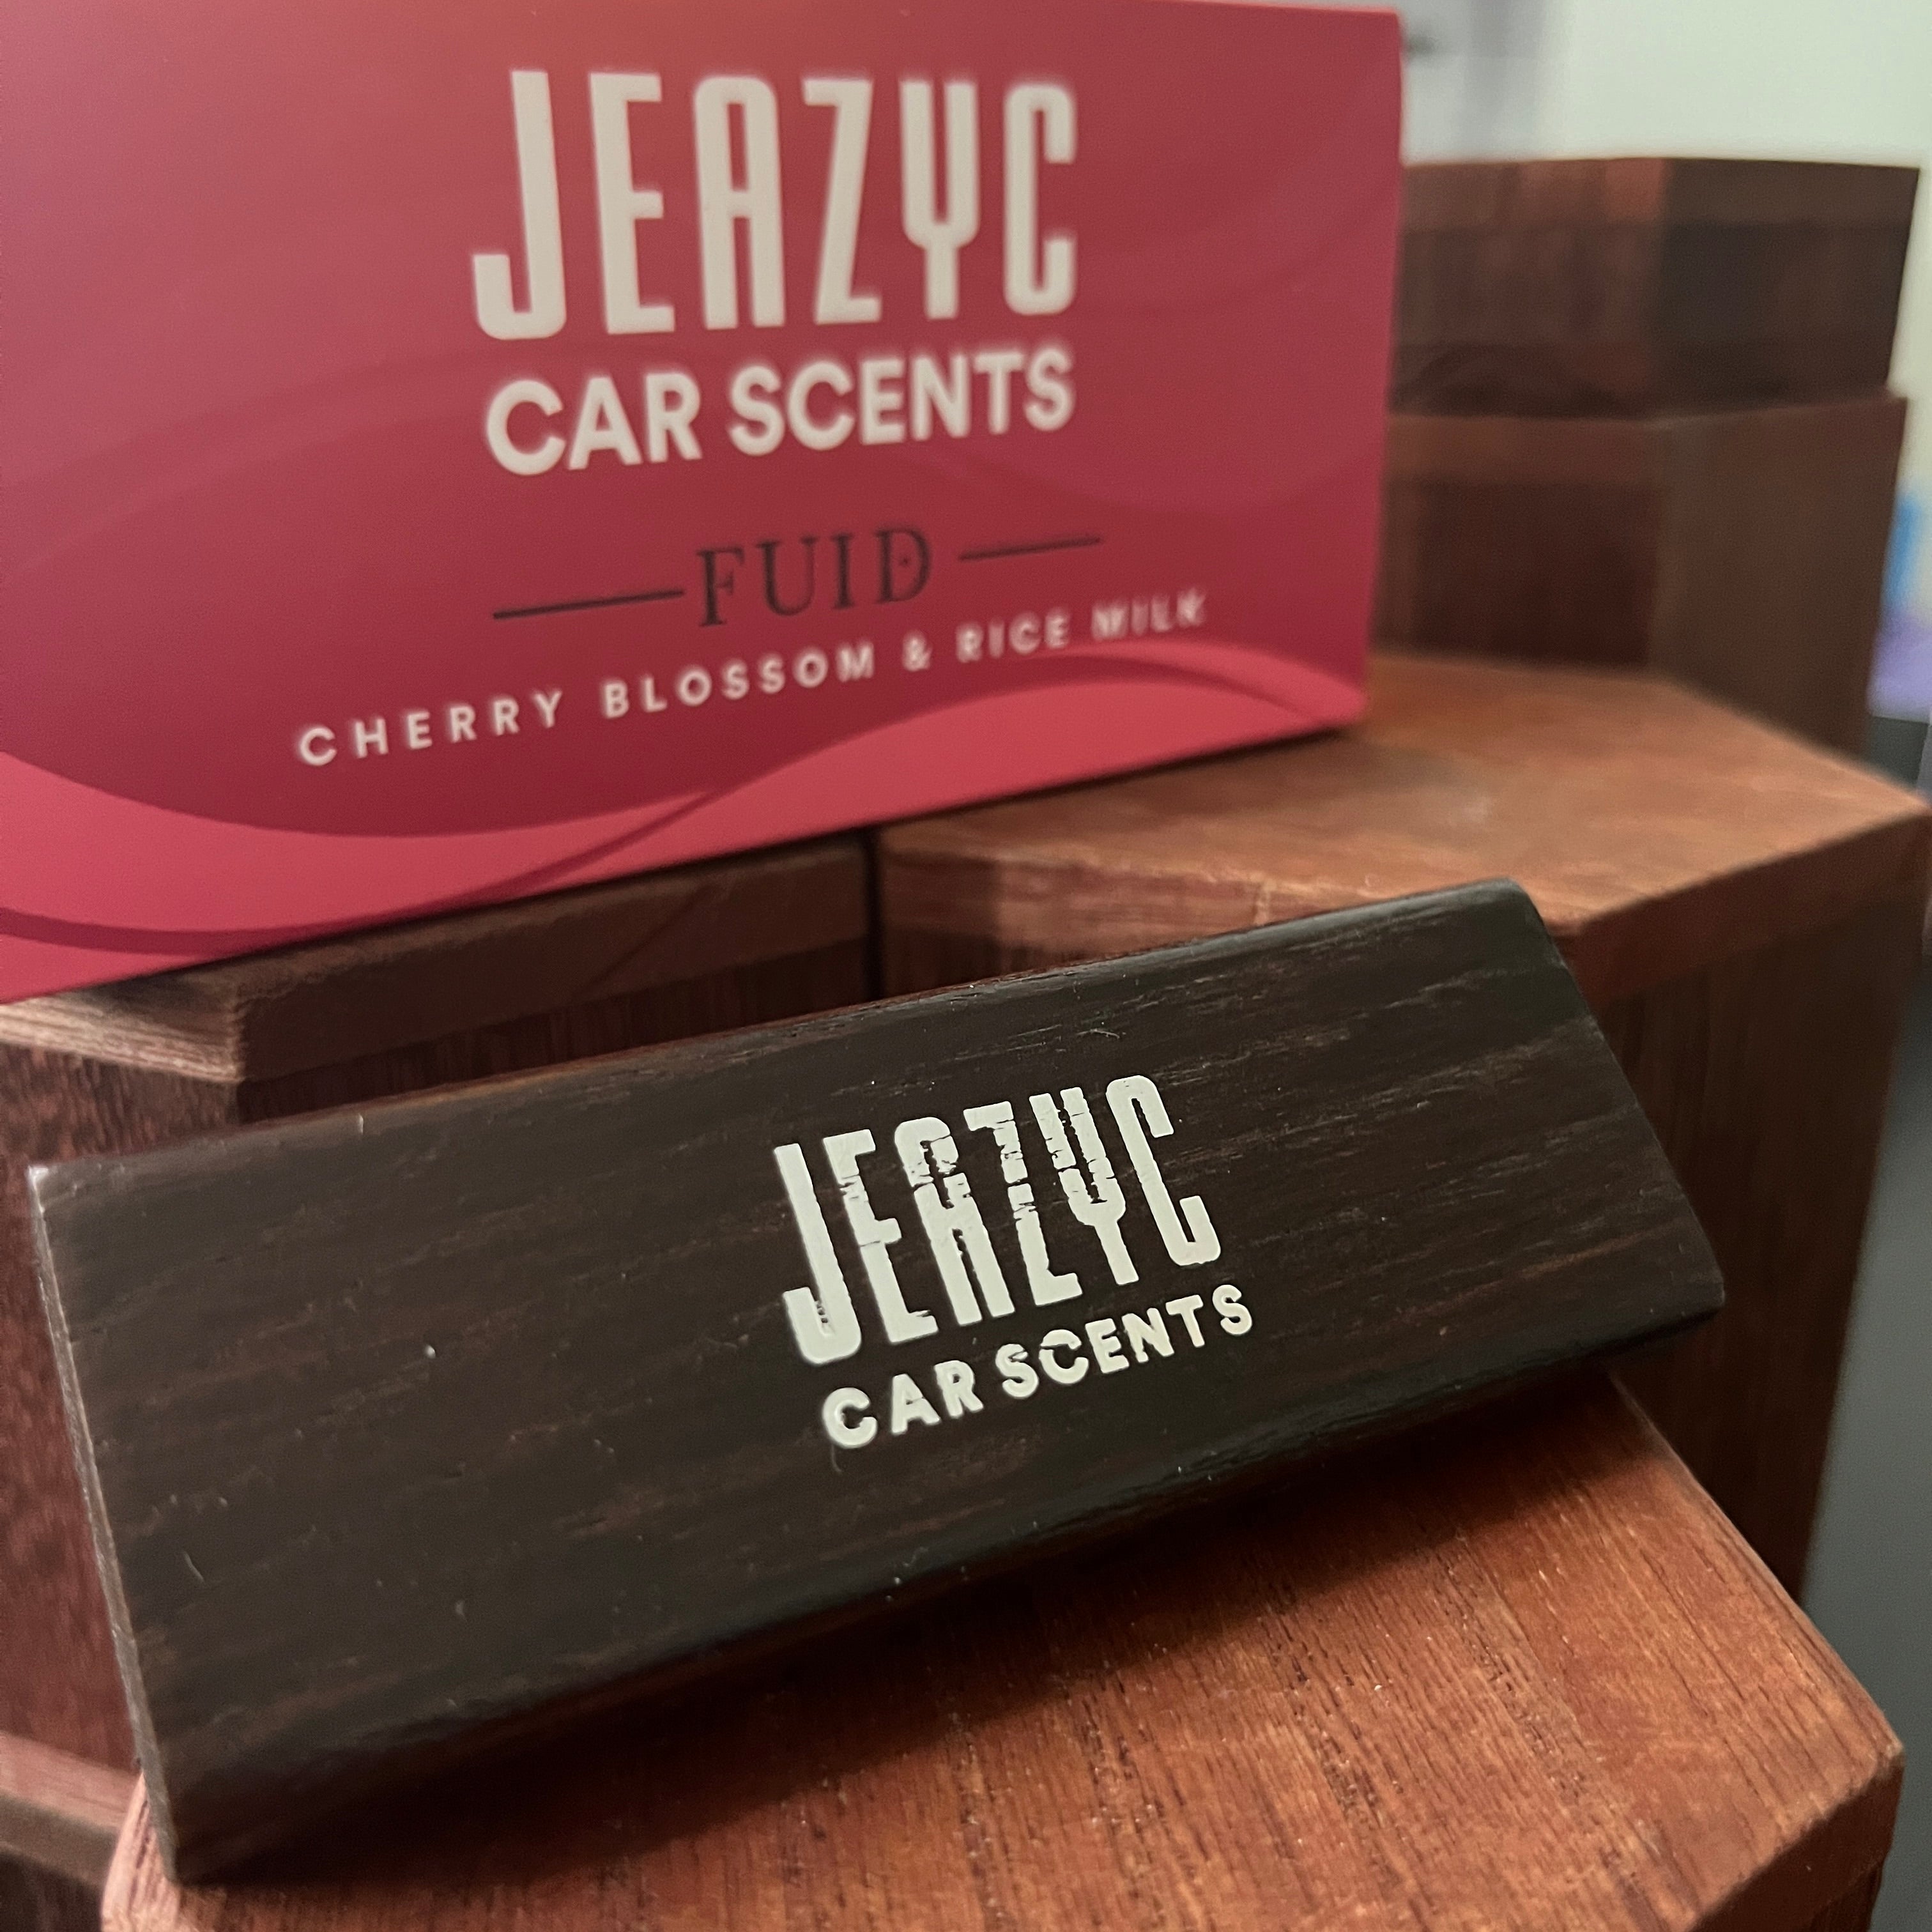 JEAZYC Car Scents - FUID Cherry Blossom & Rice Milk